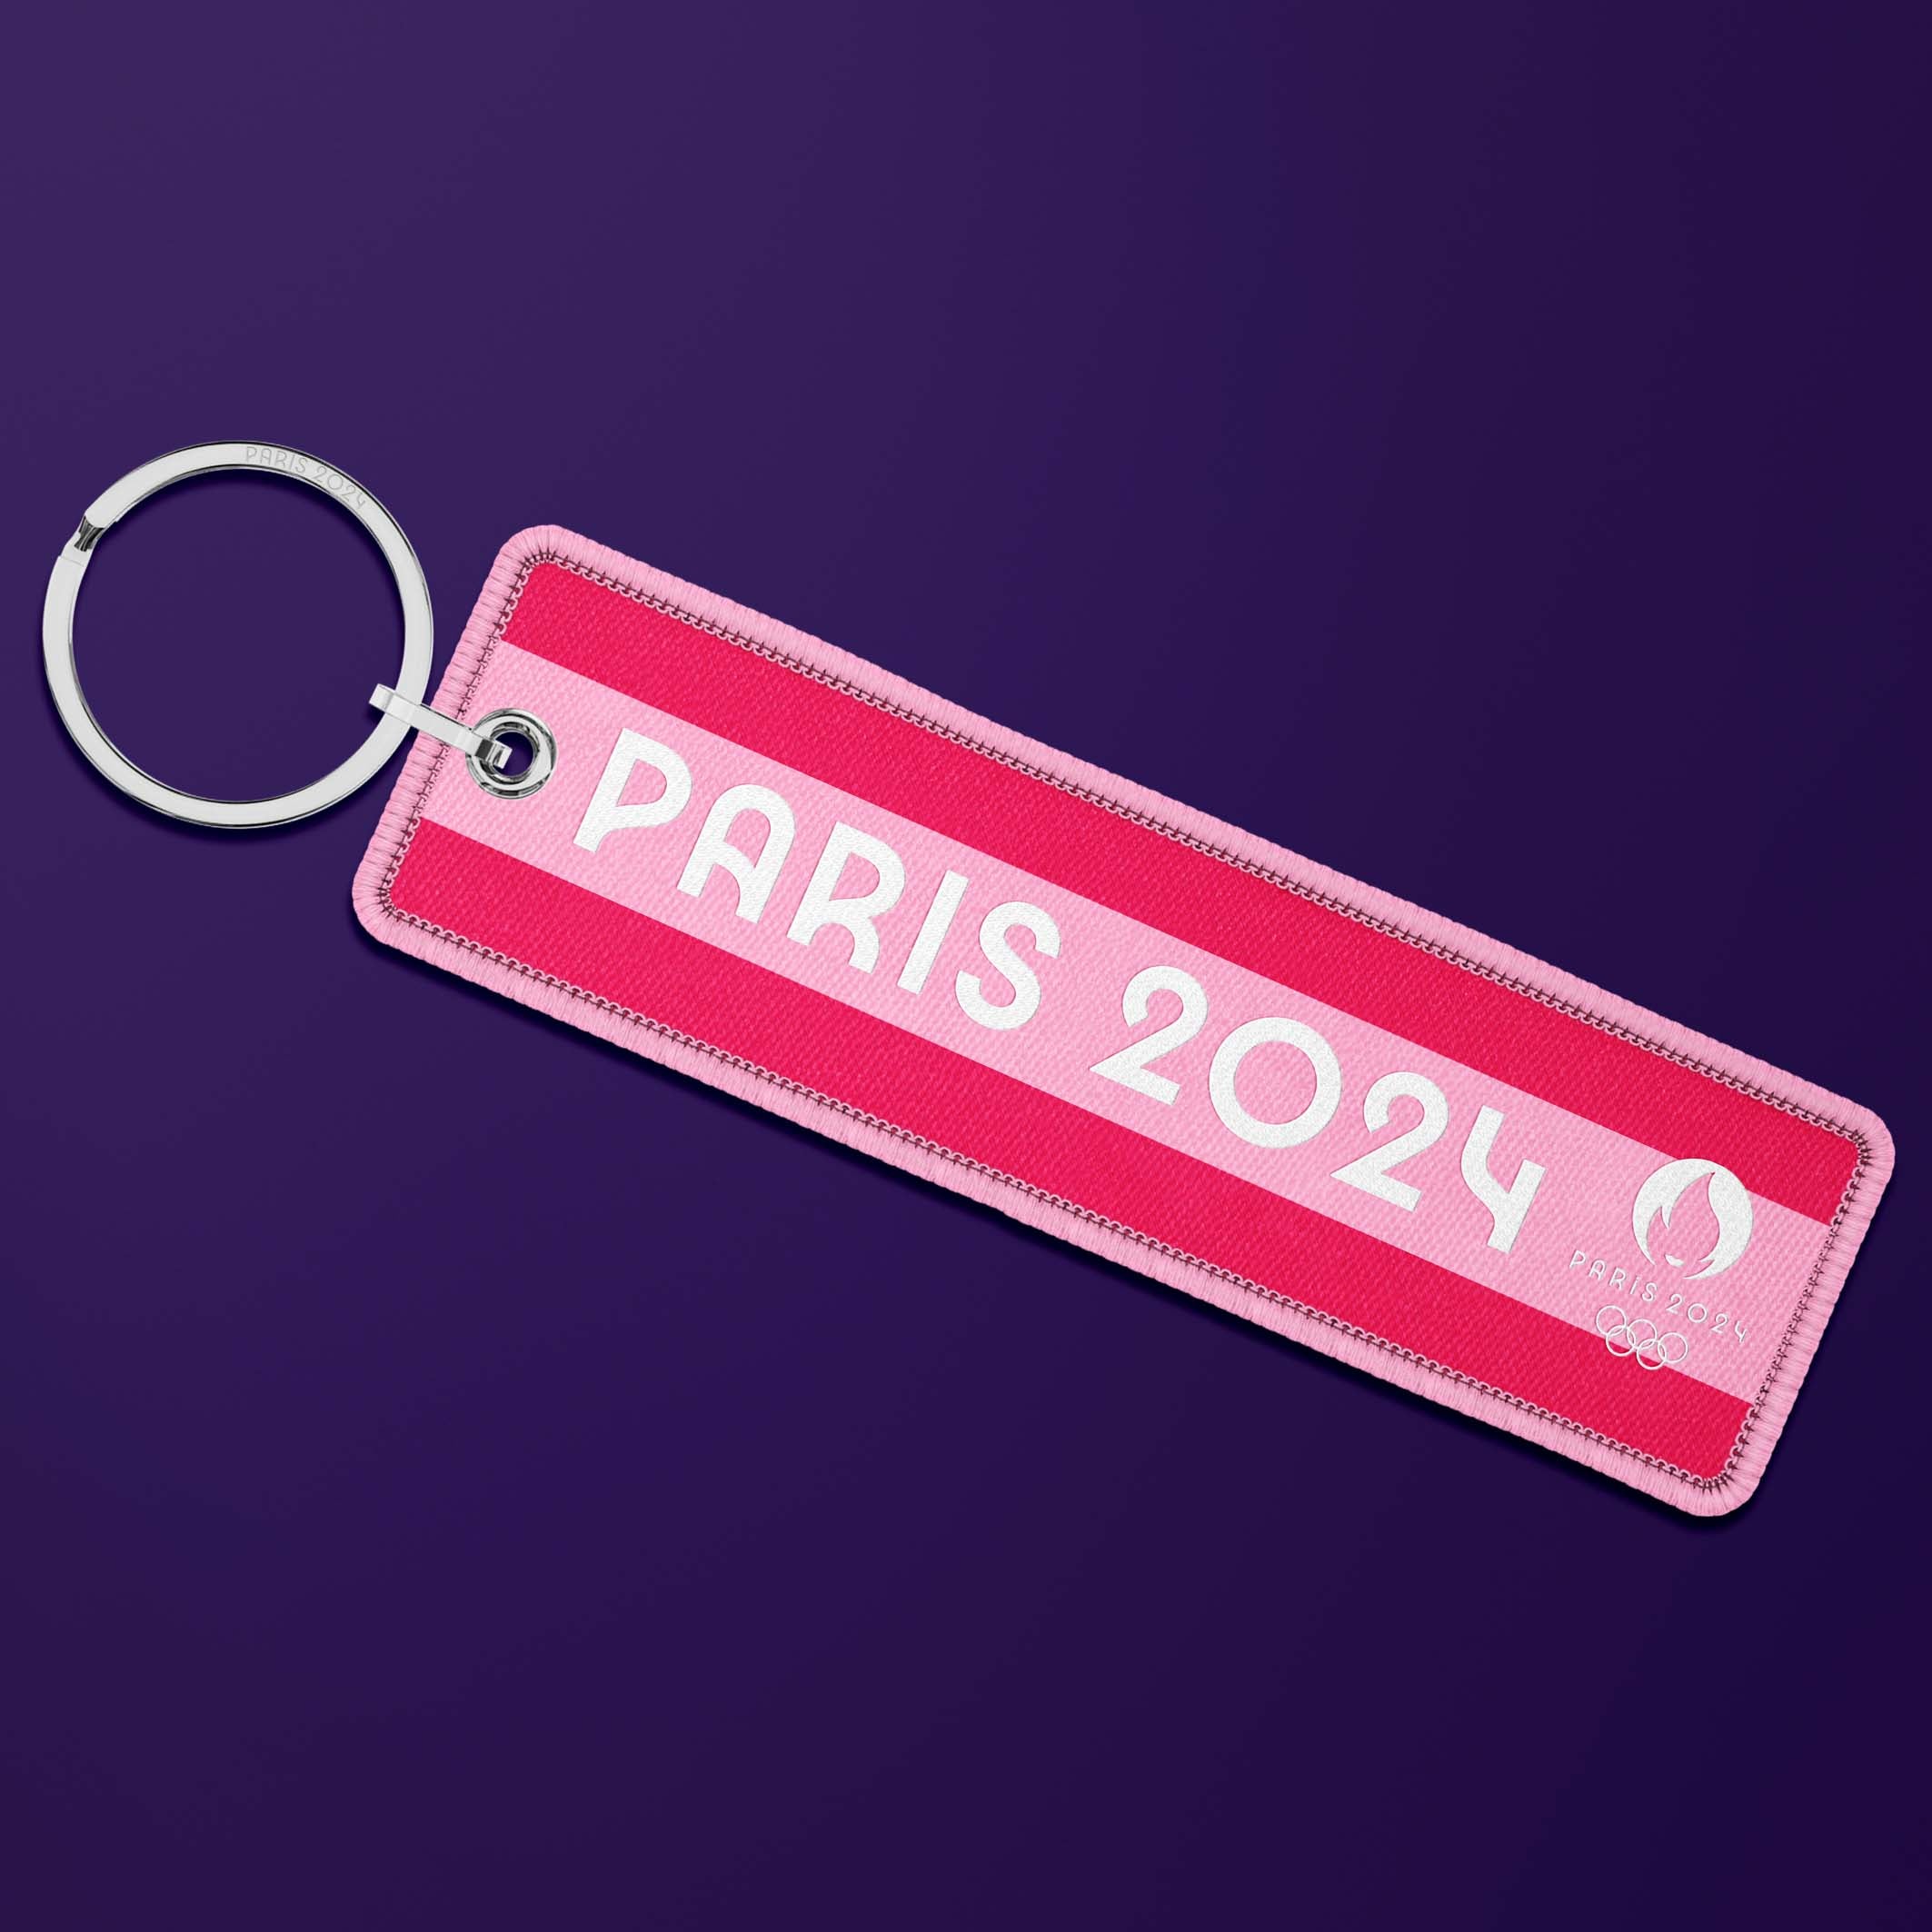 Paris 2024 Sports &amp; Stripes flame key ring - Golf